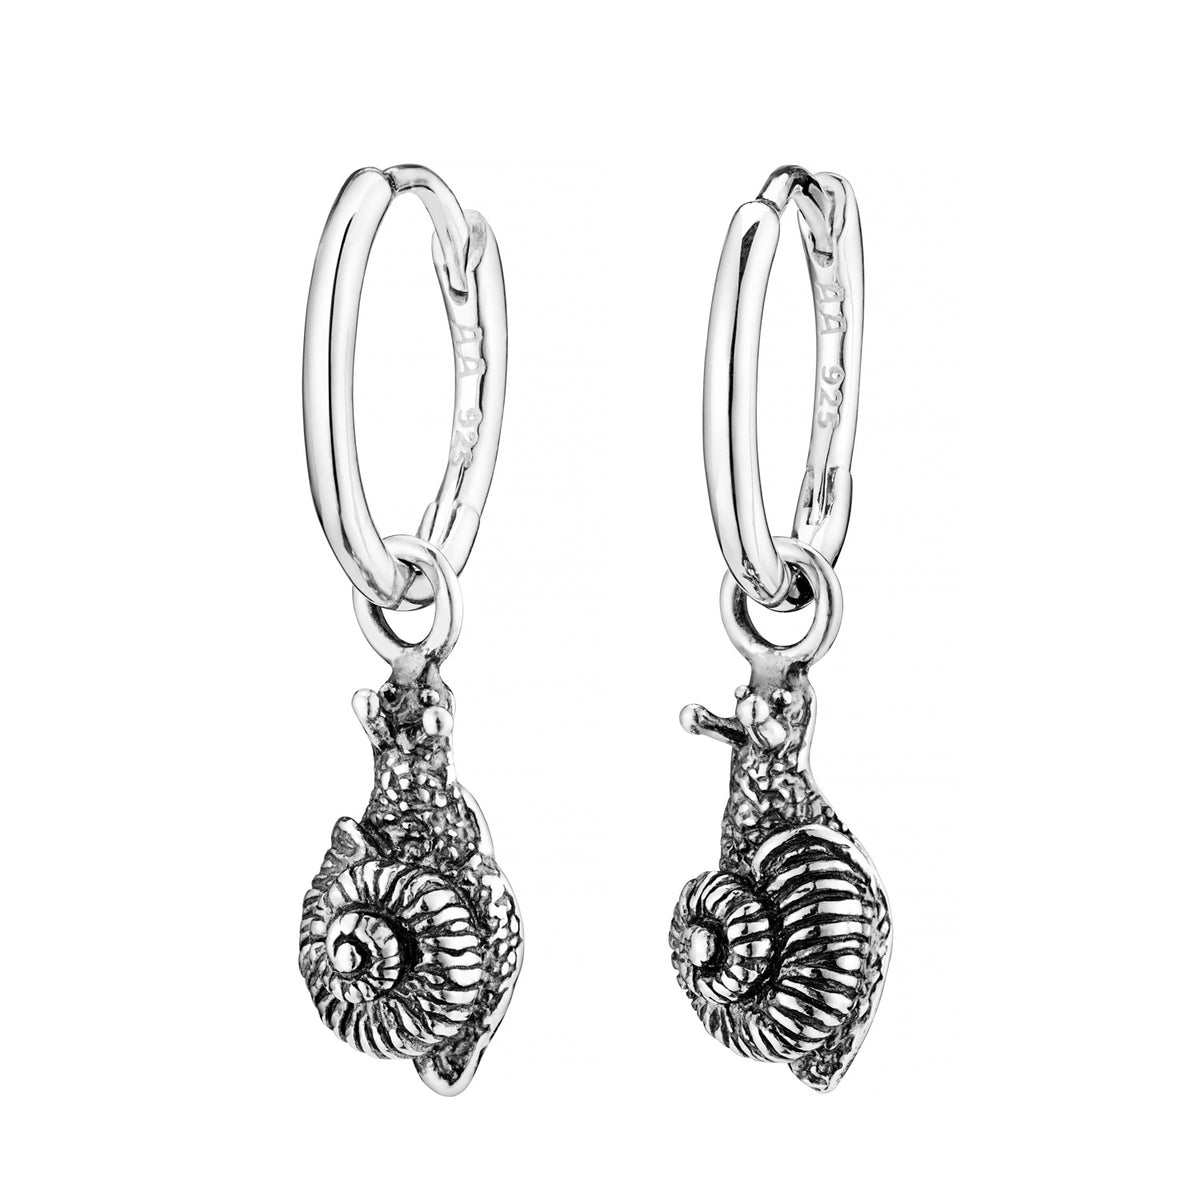 Snail bug hoop earrings alternative boho witchy gothic jewelry  jewellery 